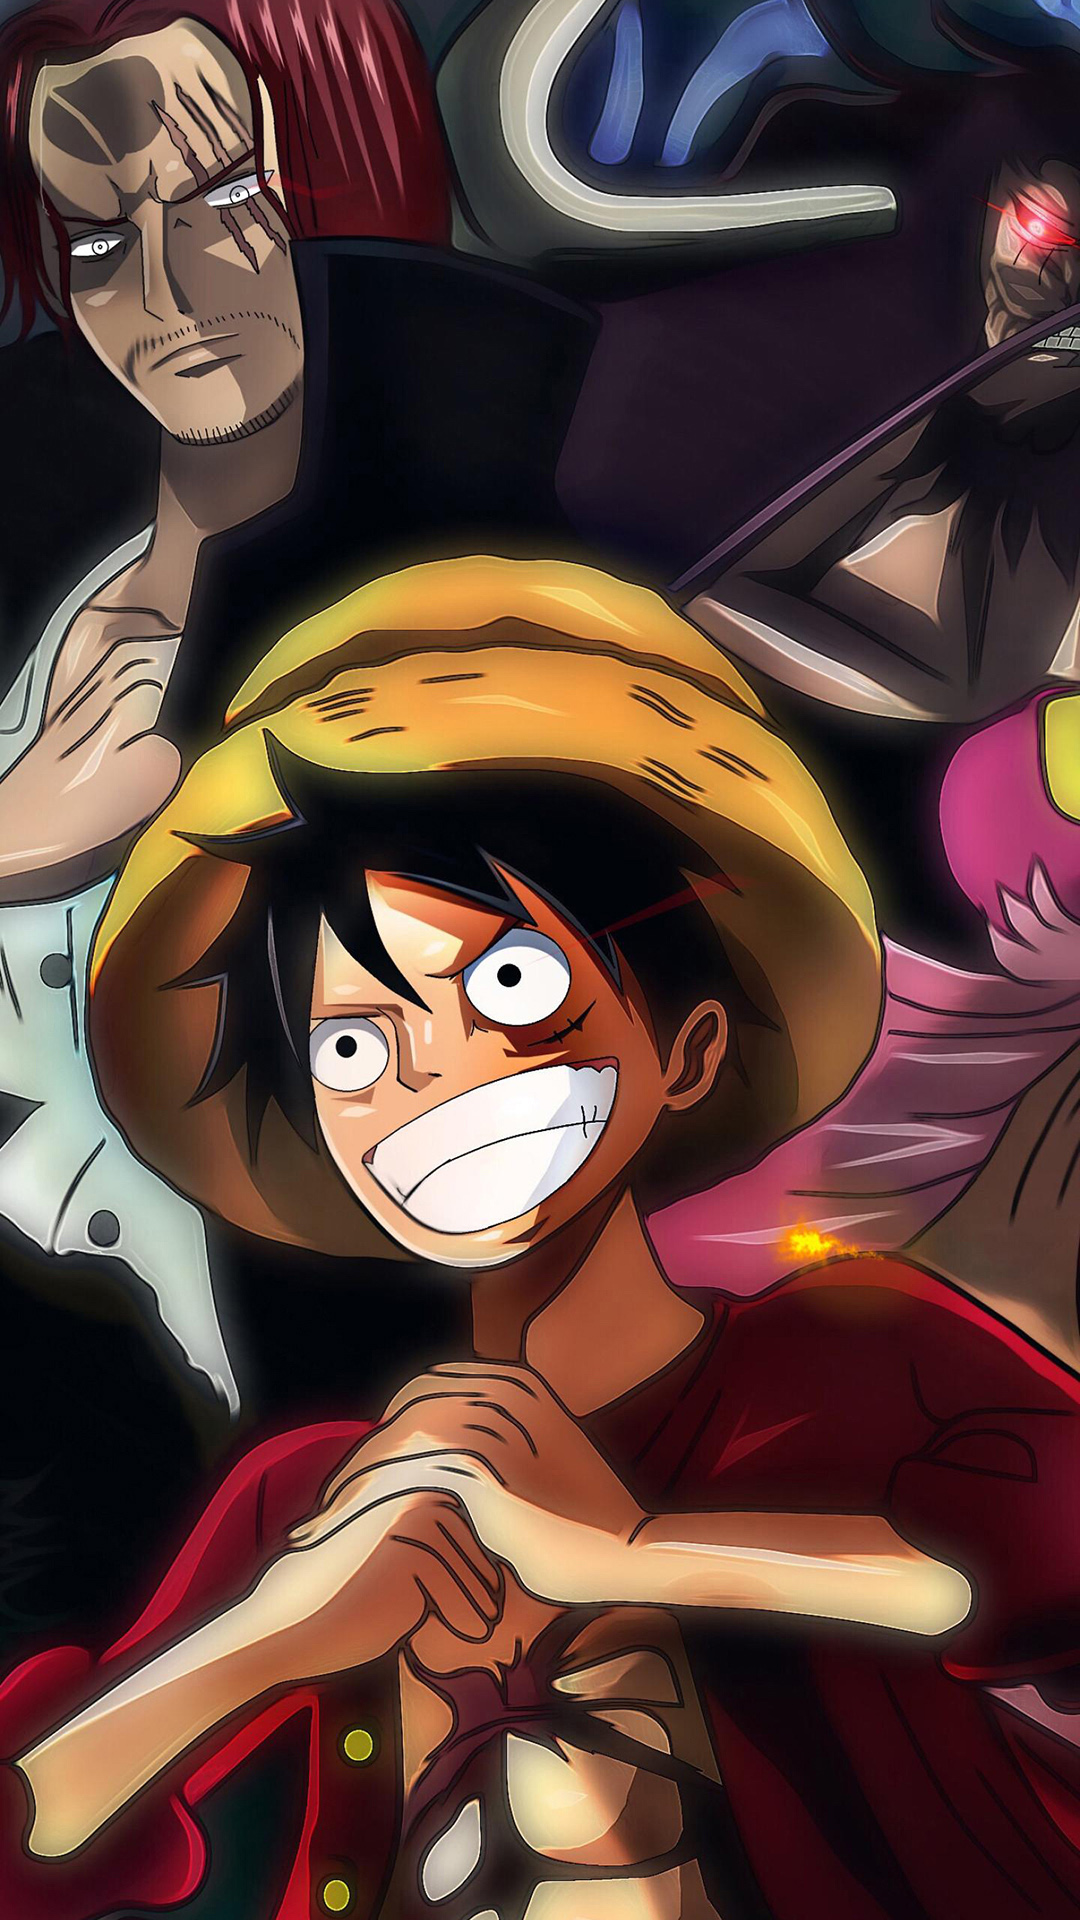 Desktop Wallpaper One Piece Anime Hd Image Picture Background 6dzhqp